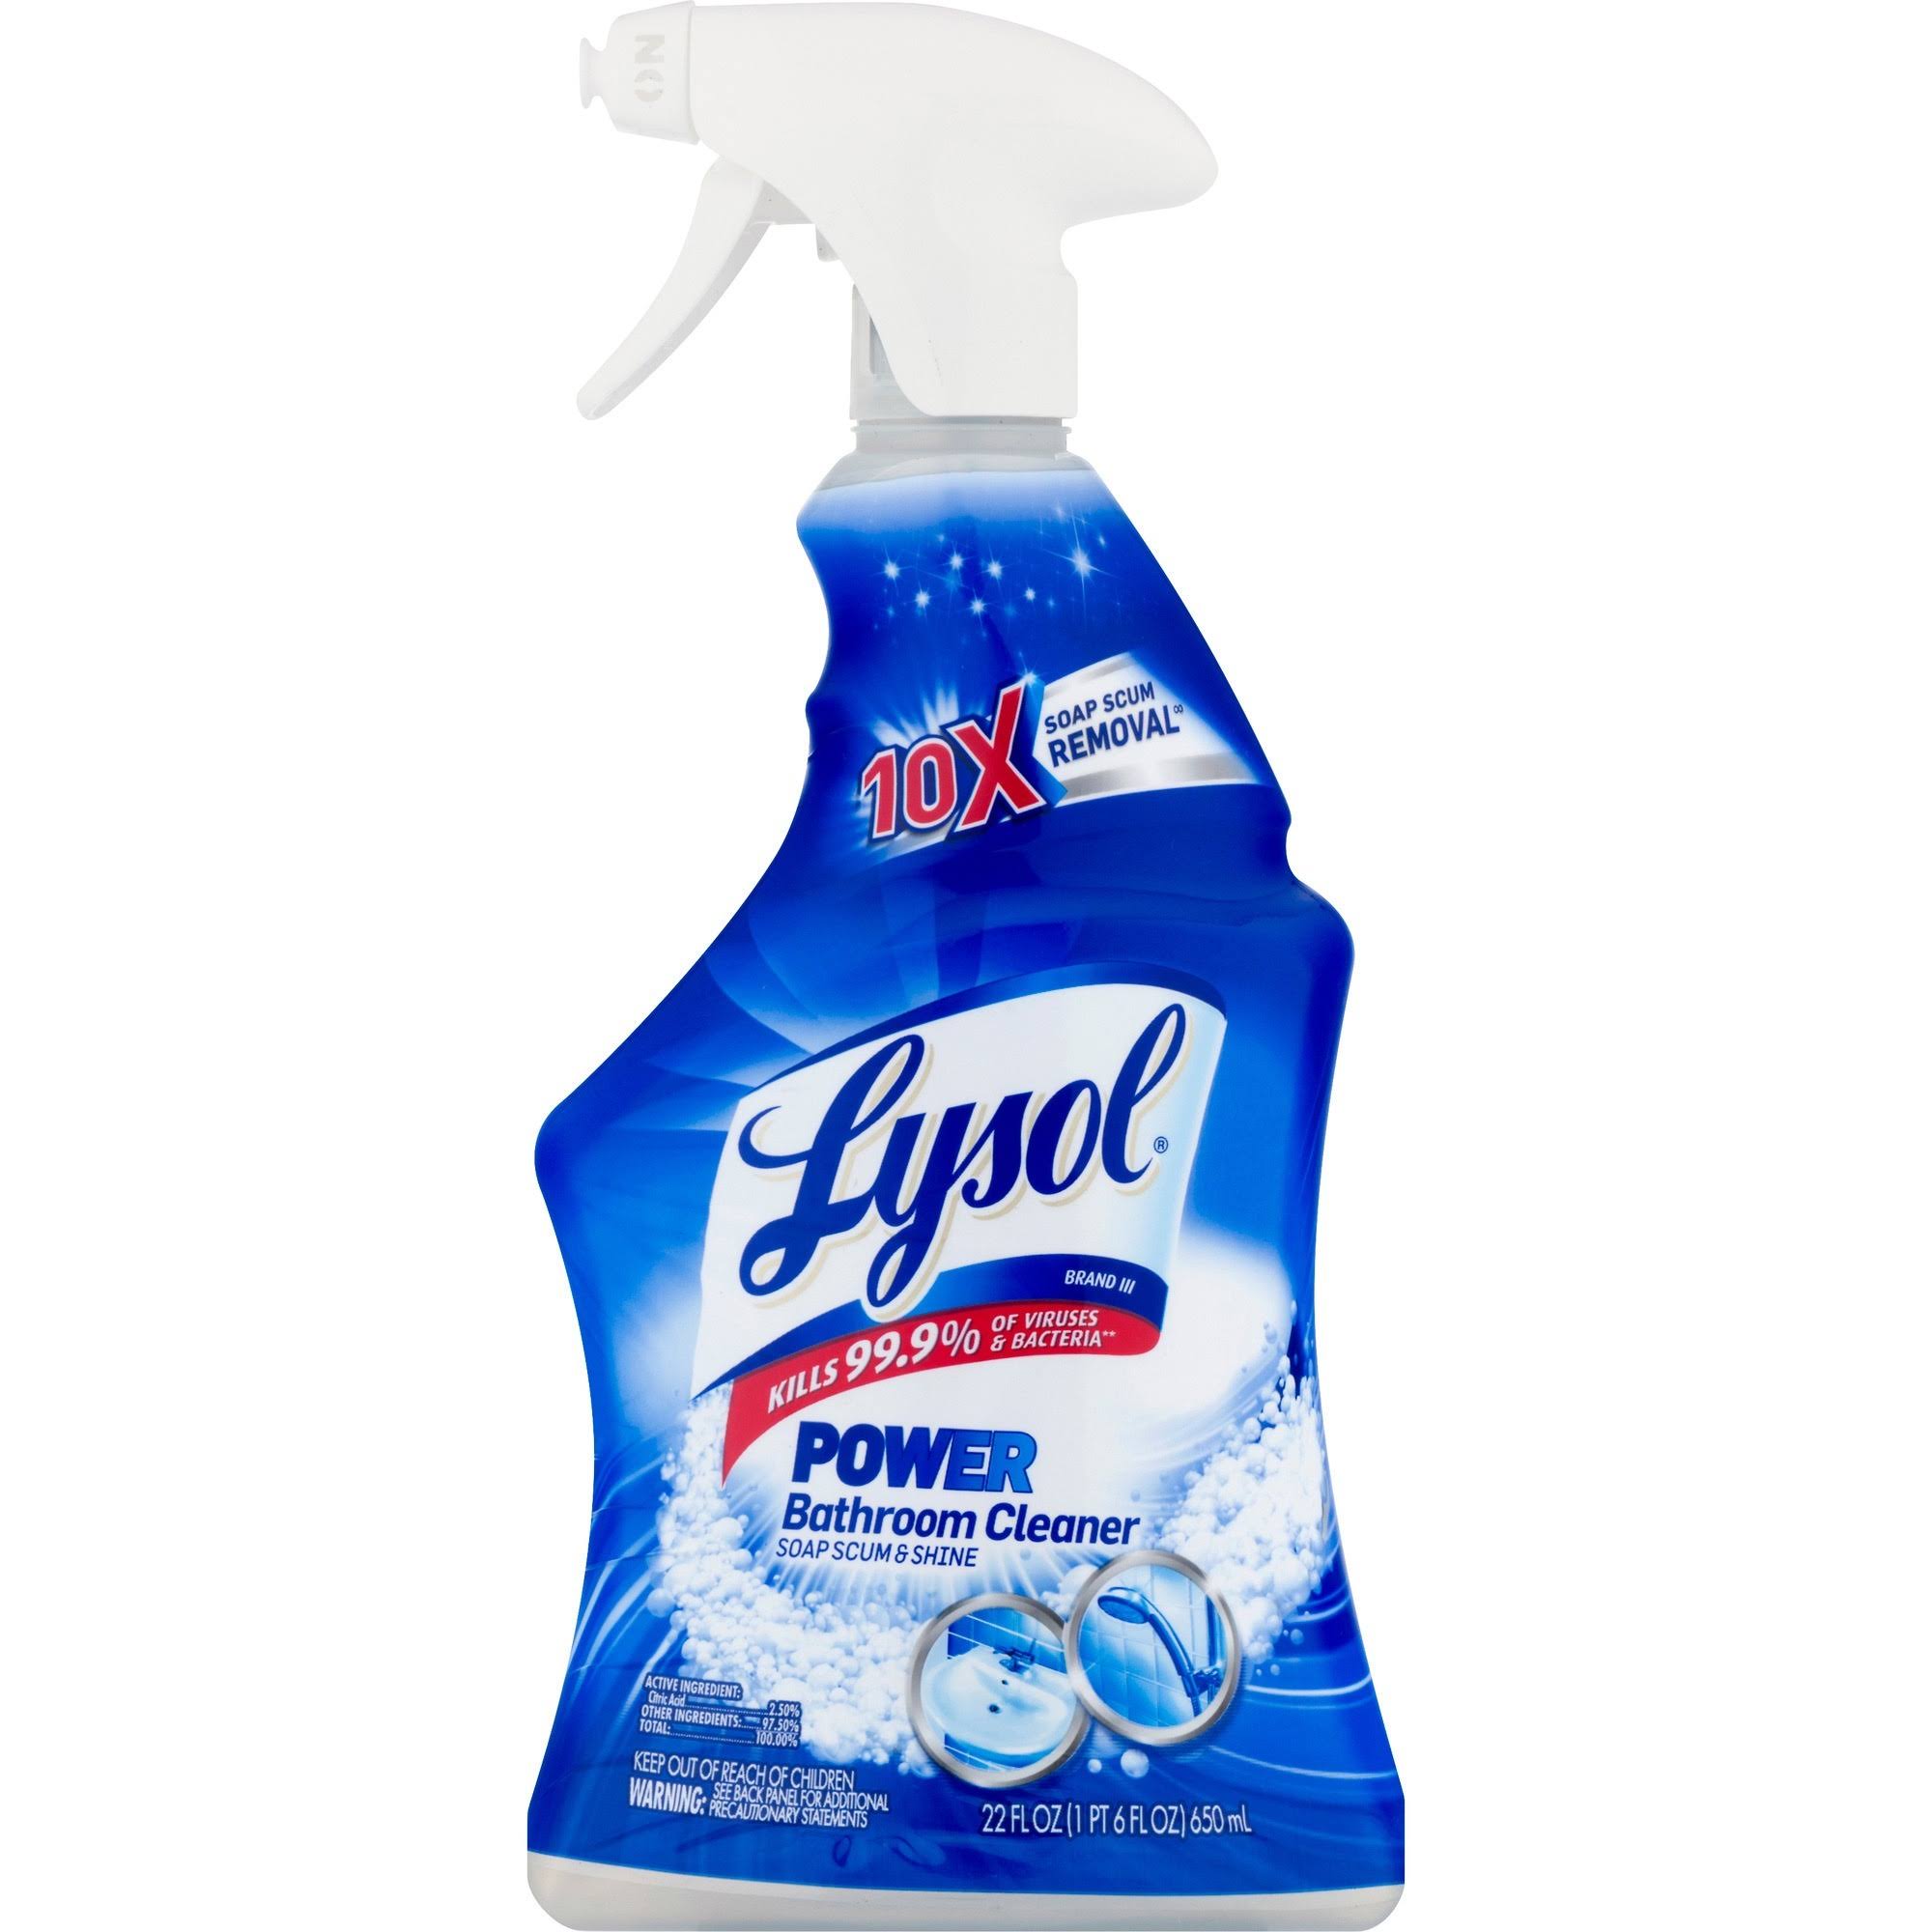 Lysol Power Bathroom Cleaner